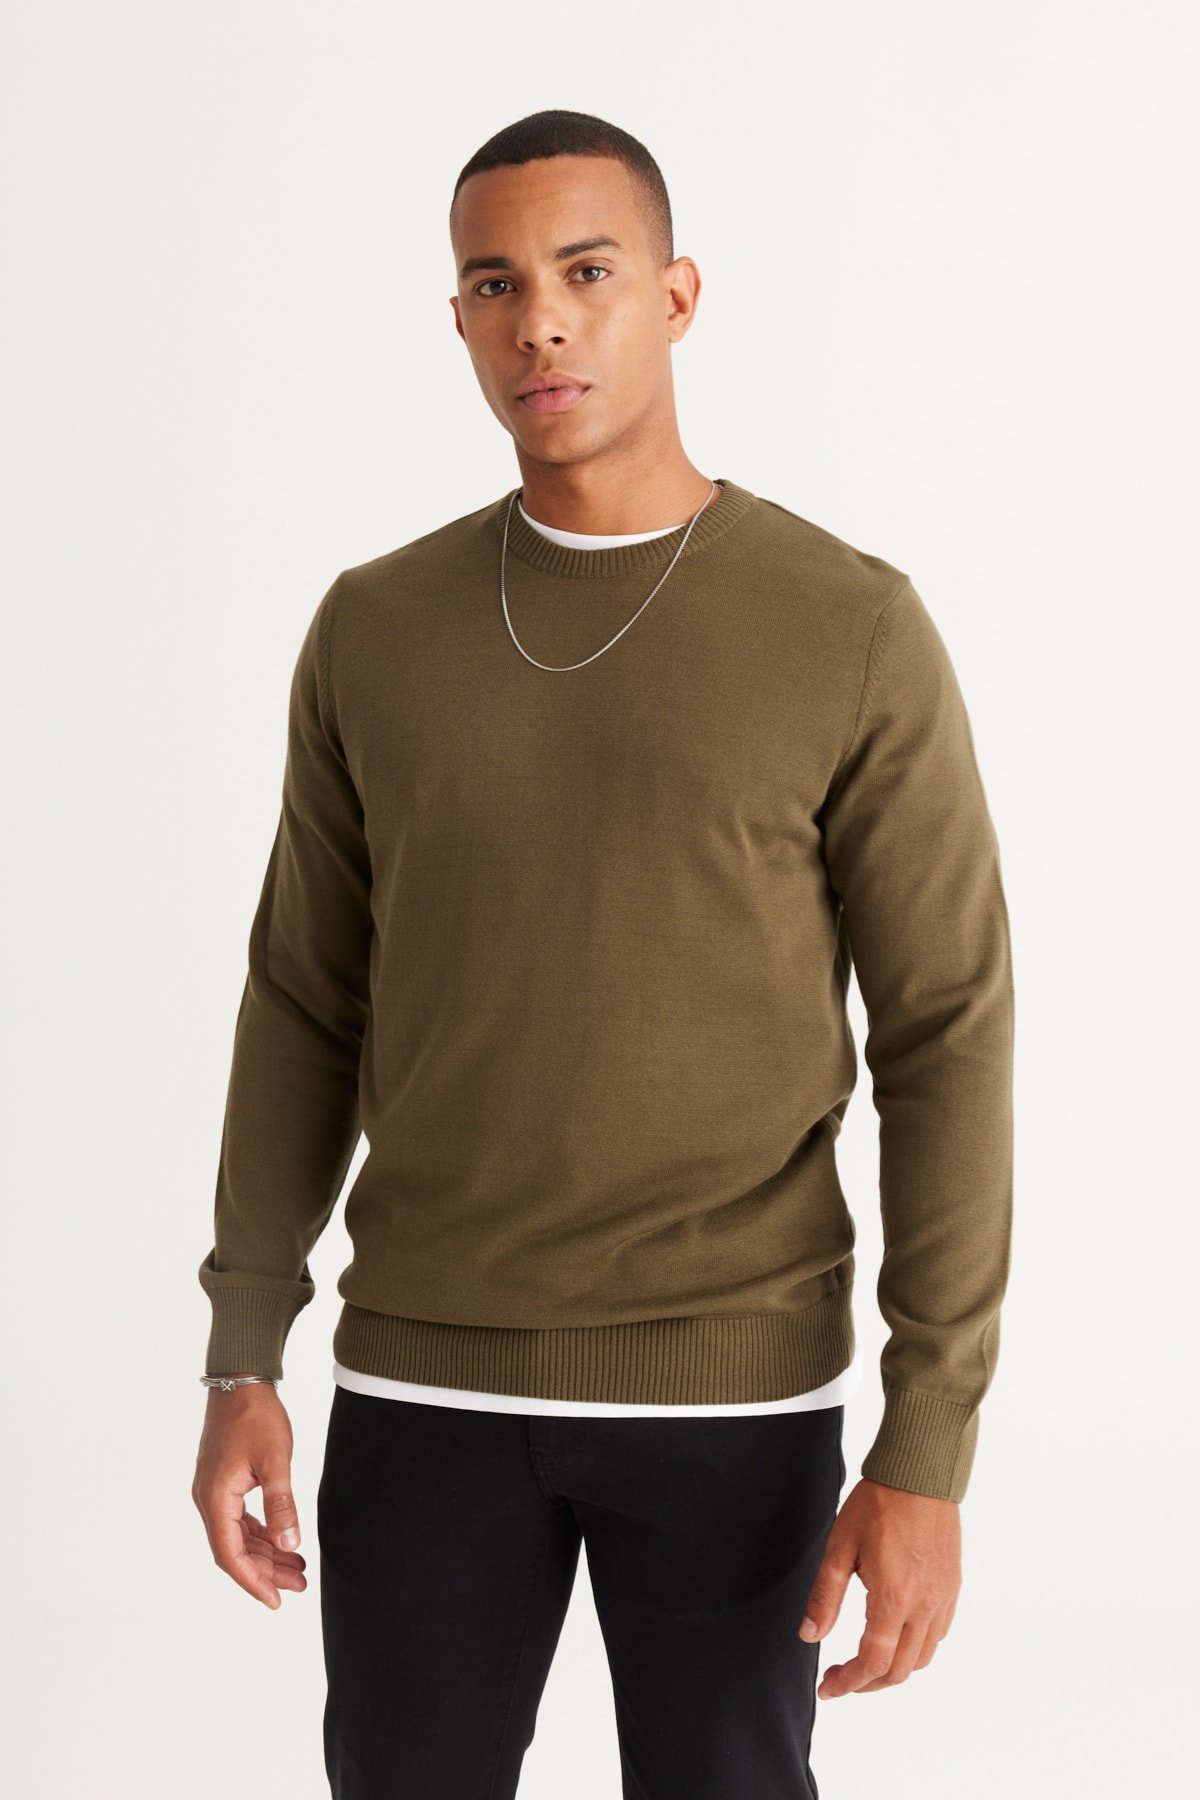 ALTINYILDIZ CLASSICS Men's Khaki Standard Fit Regular Cut Crew Neck Cotton Knitwear Sweater.